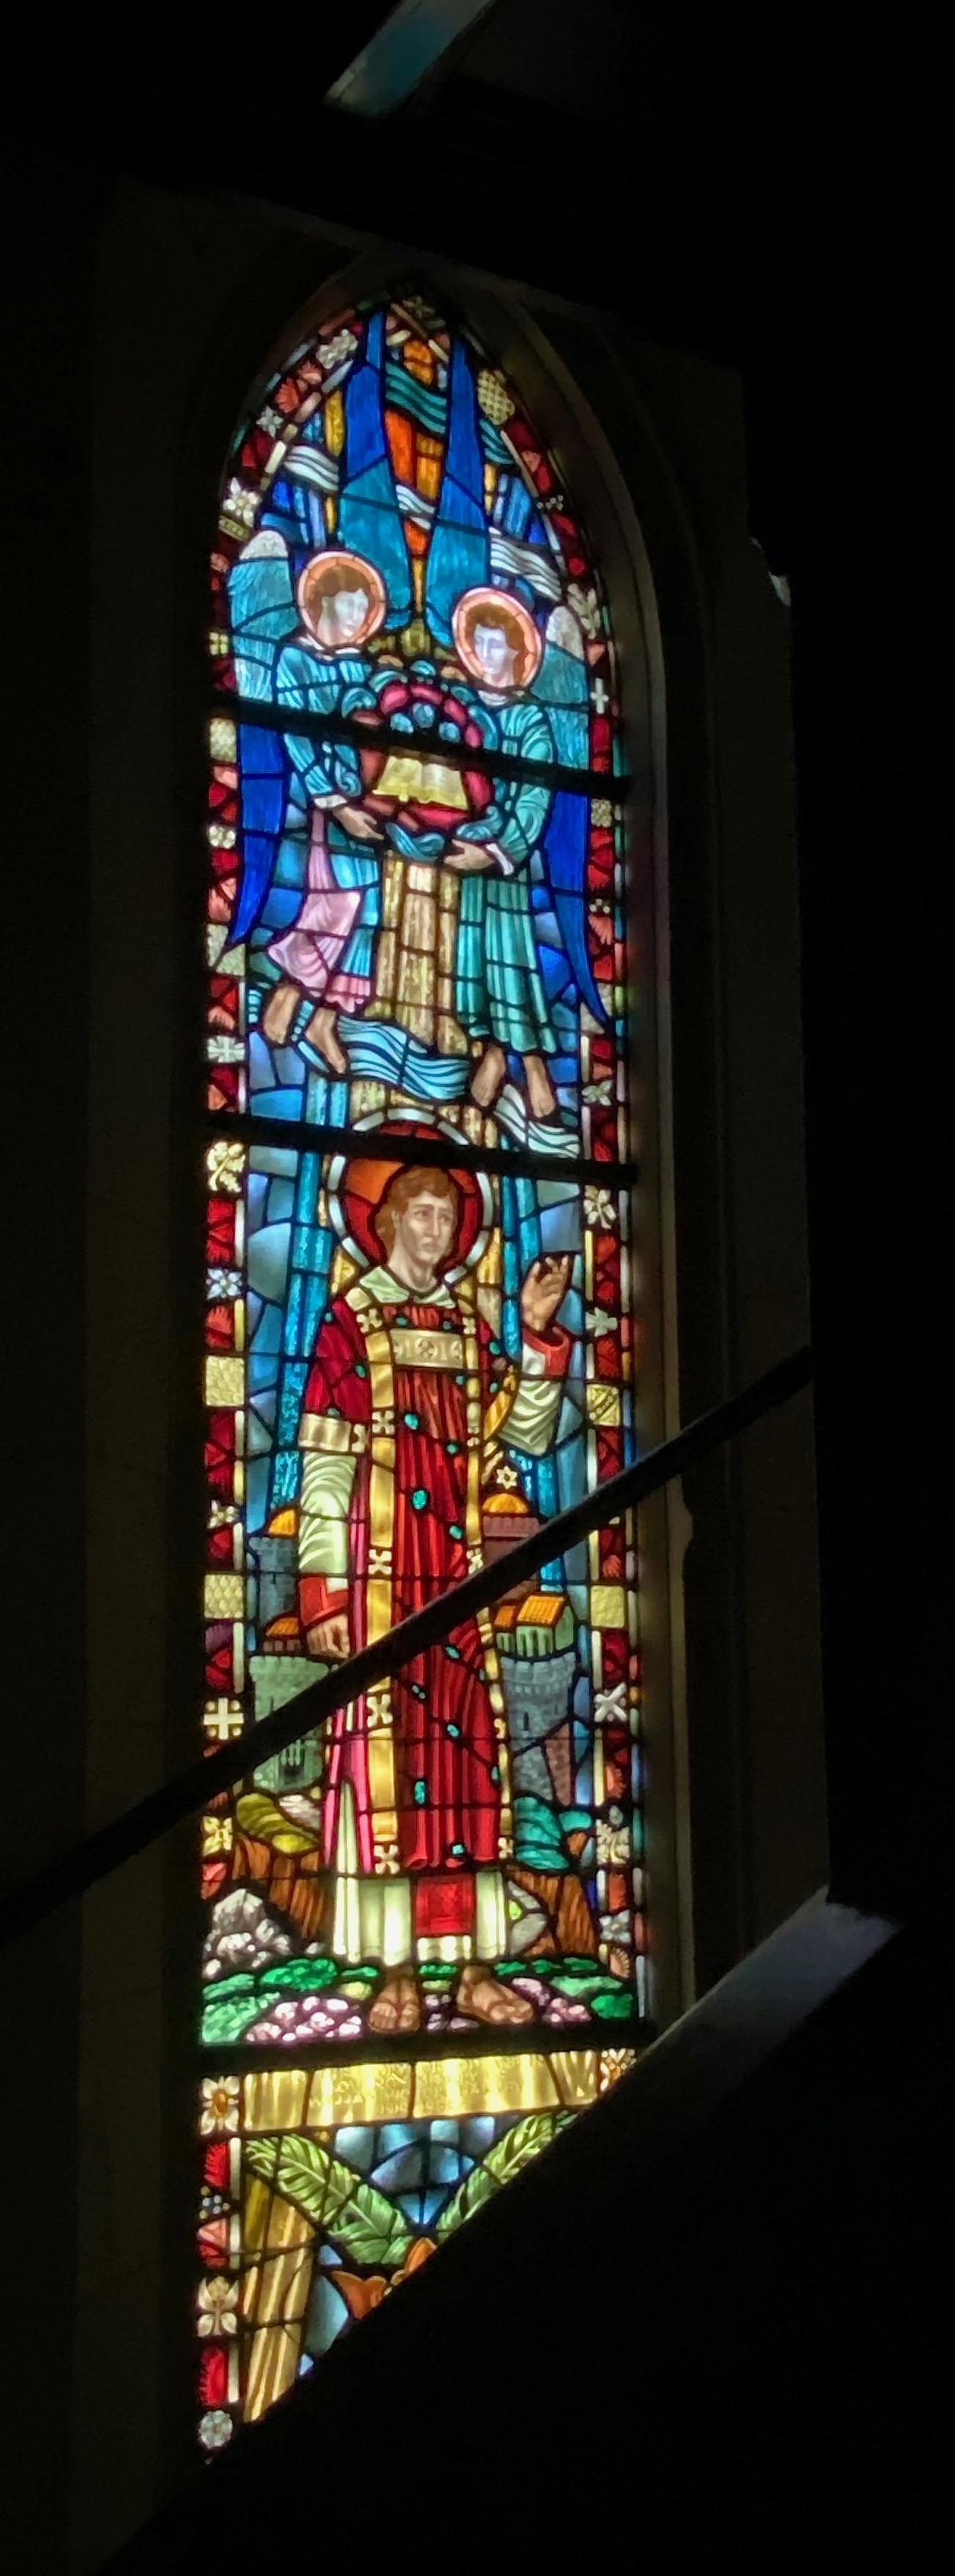 The Saint Stephen Window